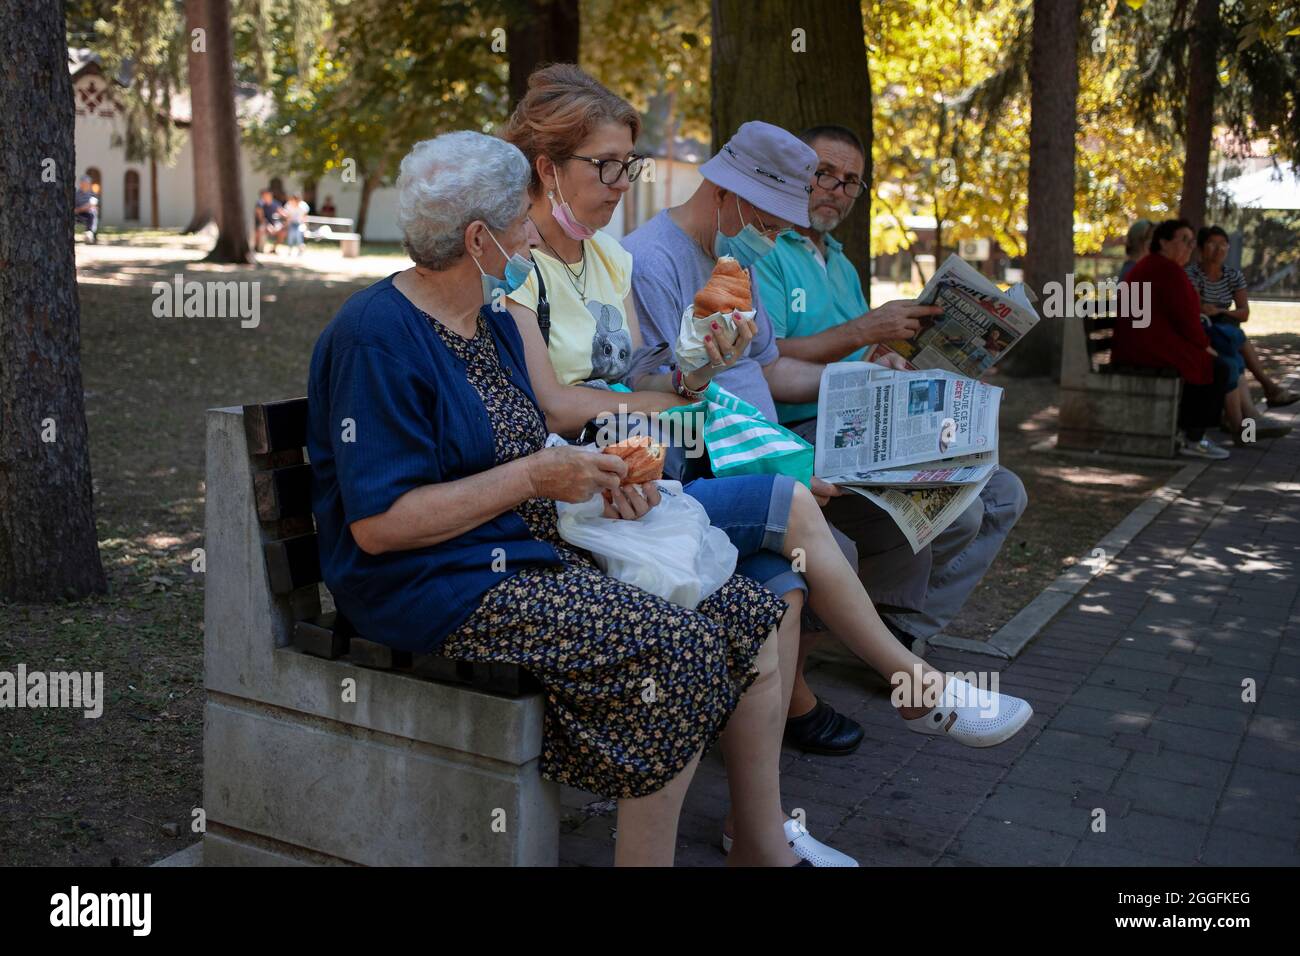 Sokobanja, Serbia, Aug 19, 2021: Two women seated on a bench having snack next to men reading newspaper Stock Photo